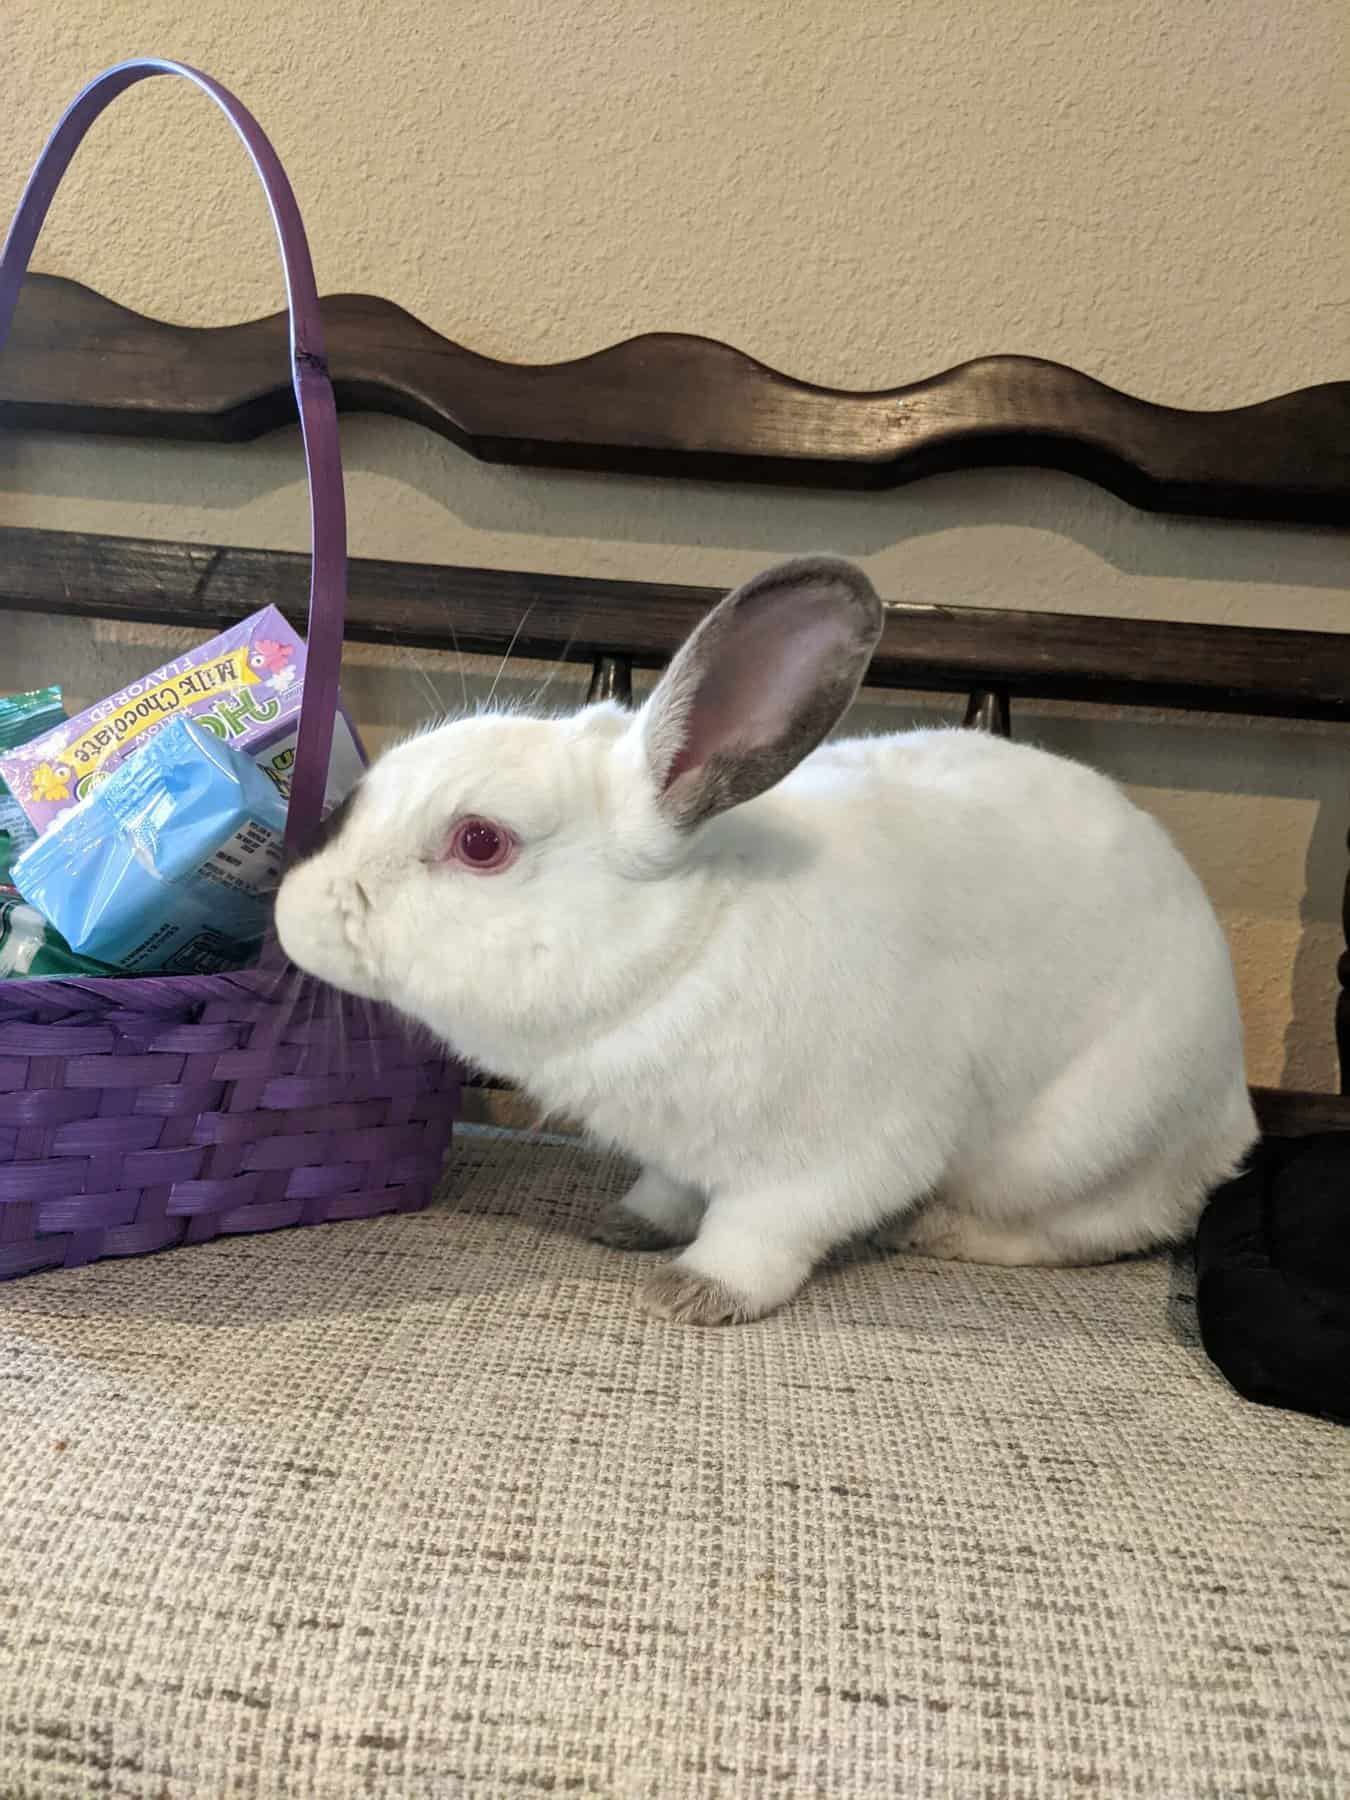 white rabbit sniffing a basket.